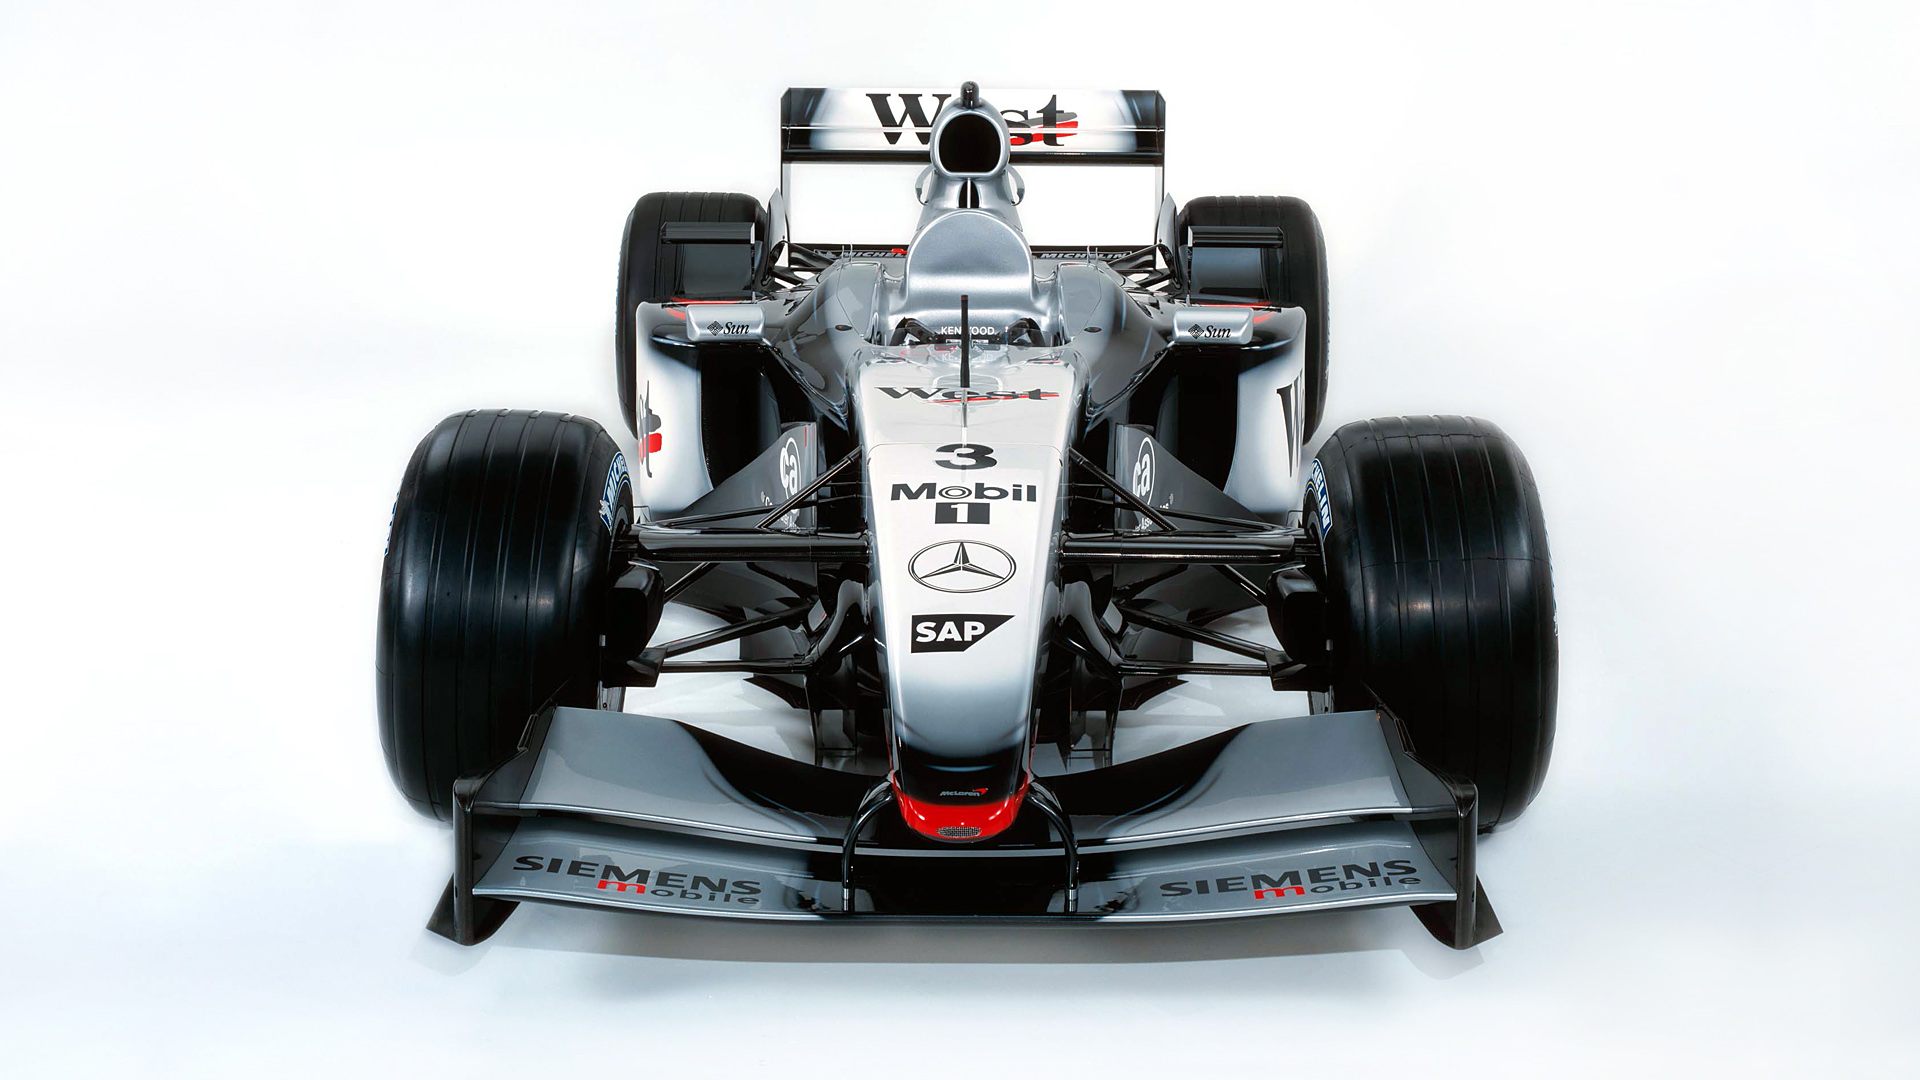  2002 McLaren MP4-17 Wallpaper.